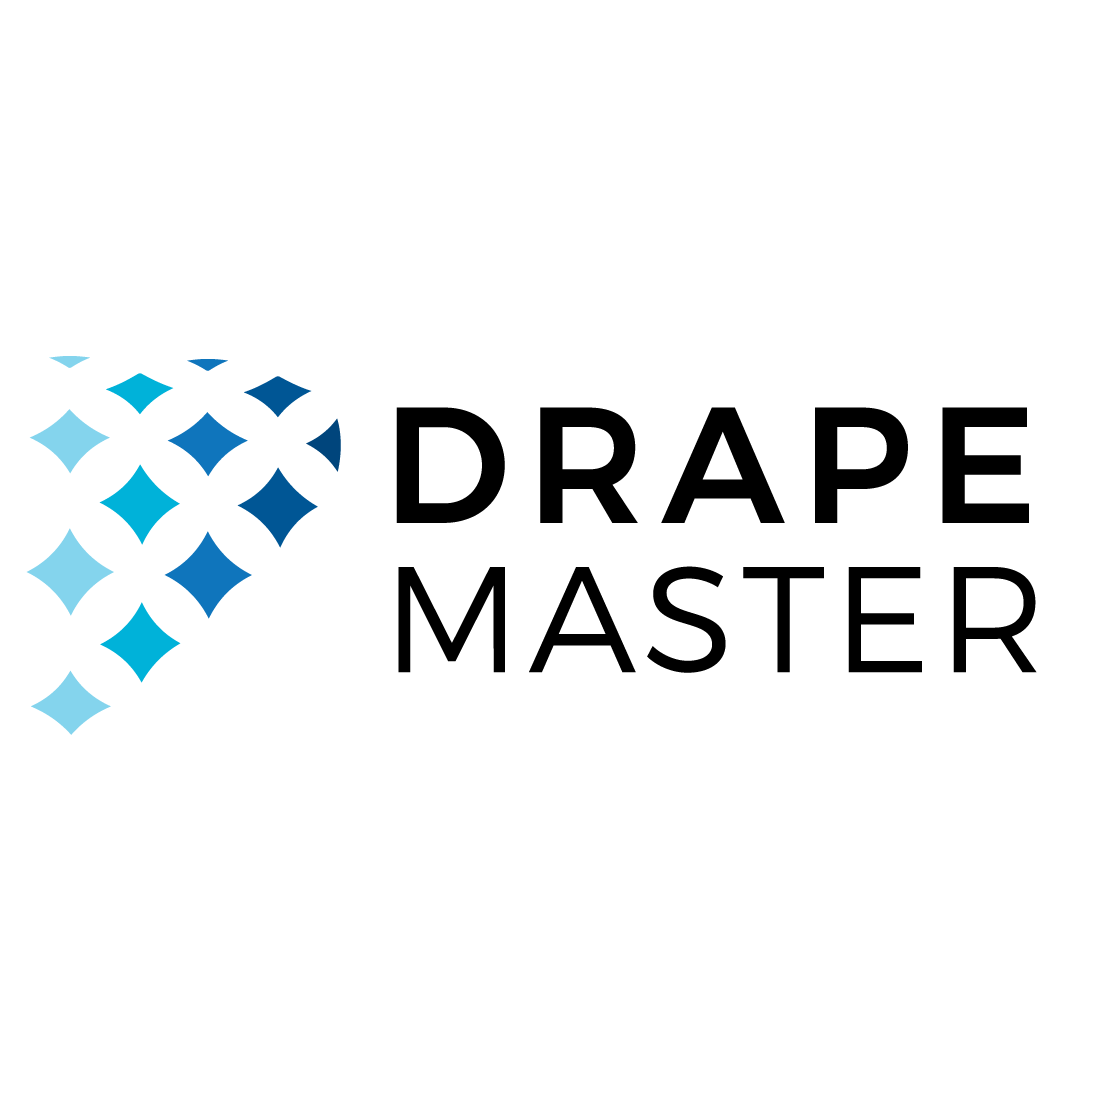 Drape Master's logo